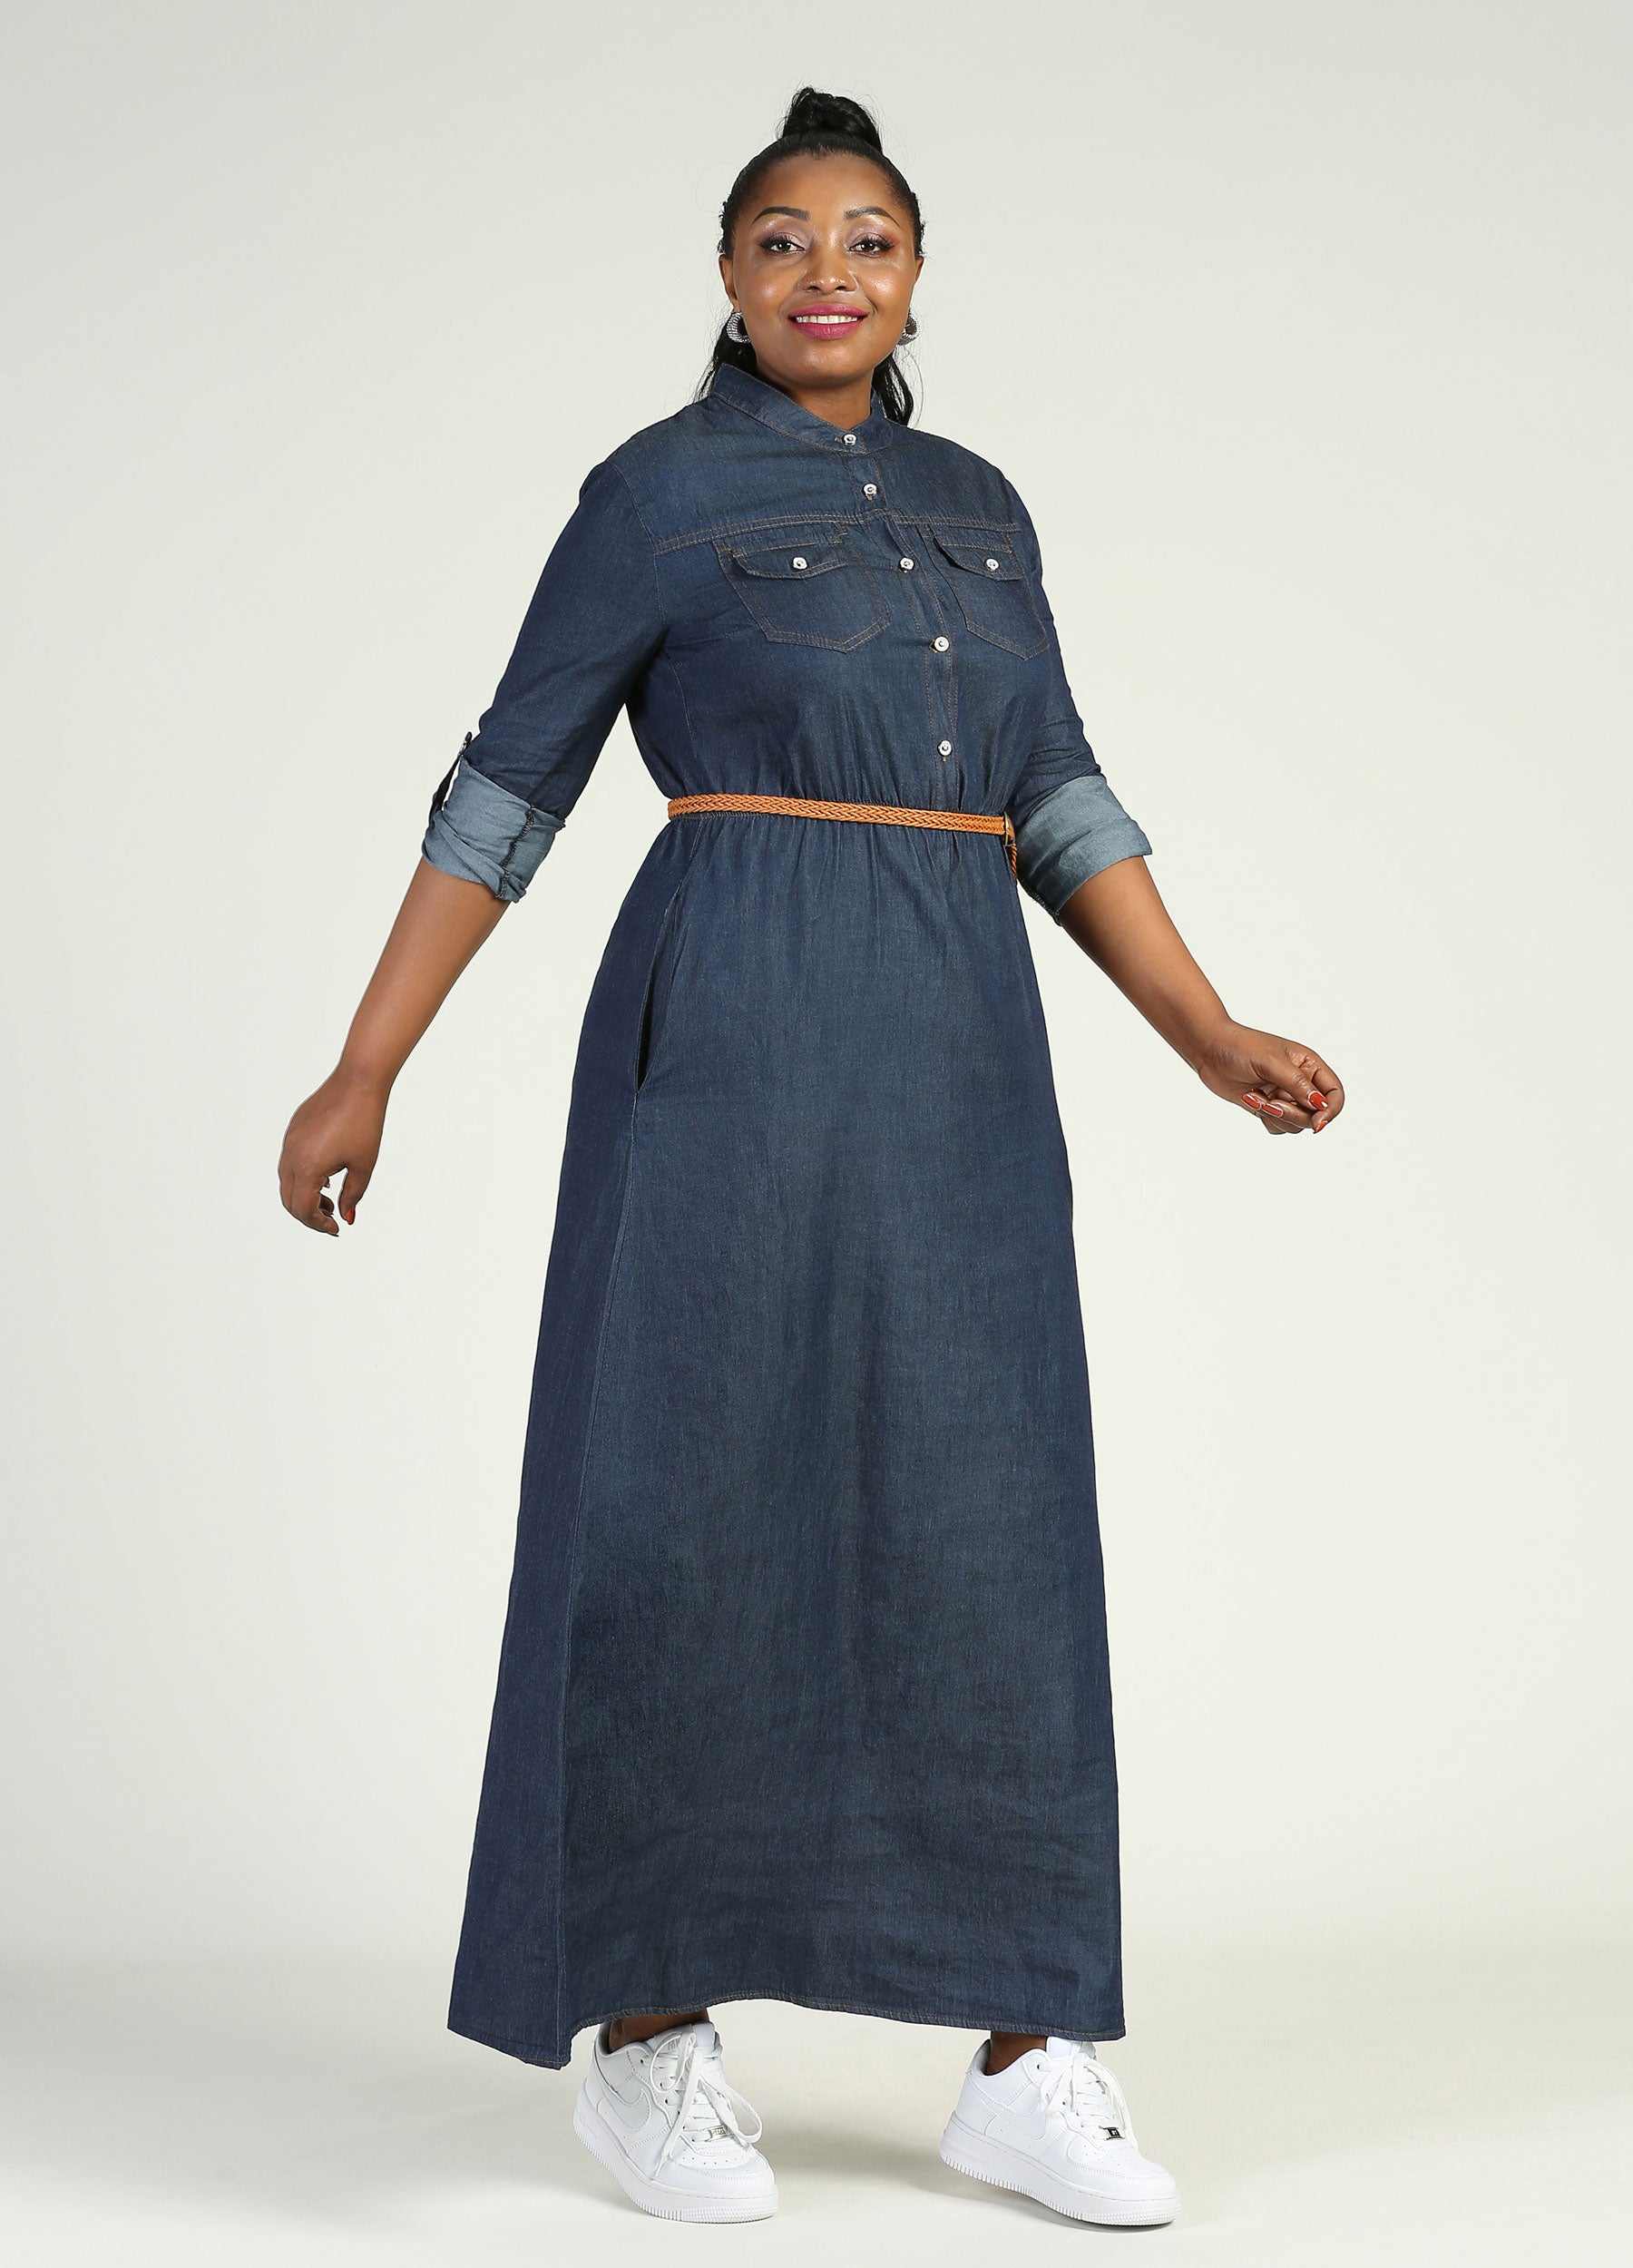 Buy Online|Spykar Women Mid Blue Cotton Regular Fit Classic Collar Knee Length  Denim Dress